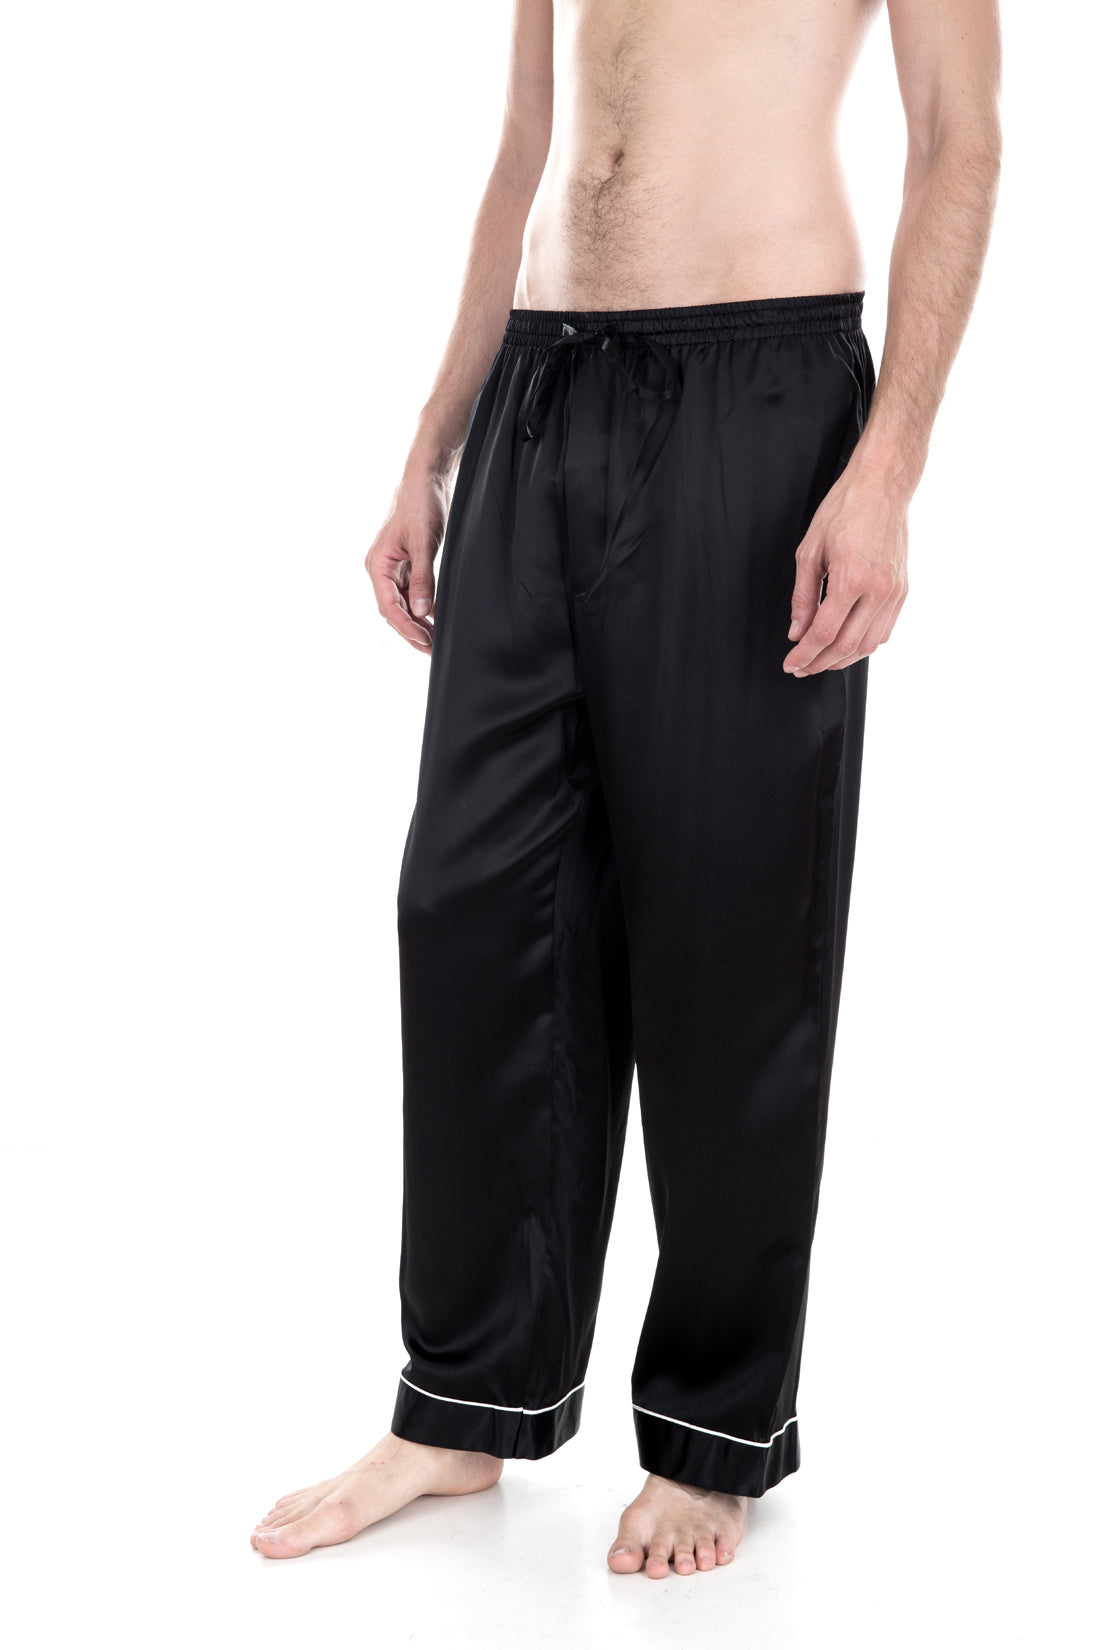 Oscar Rossa Men's Silk Sleepwear 100% Silk Pajama Pants, Size: Large, Blue